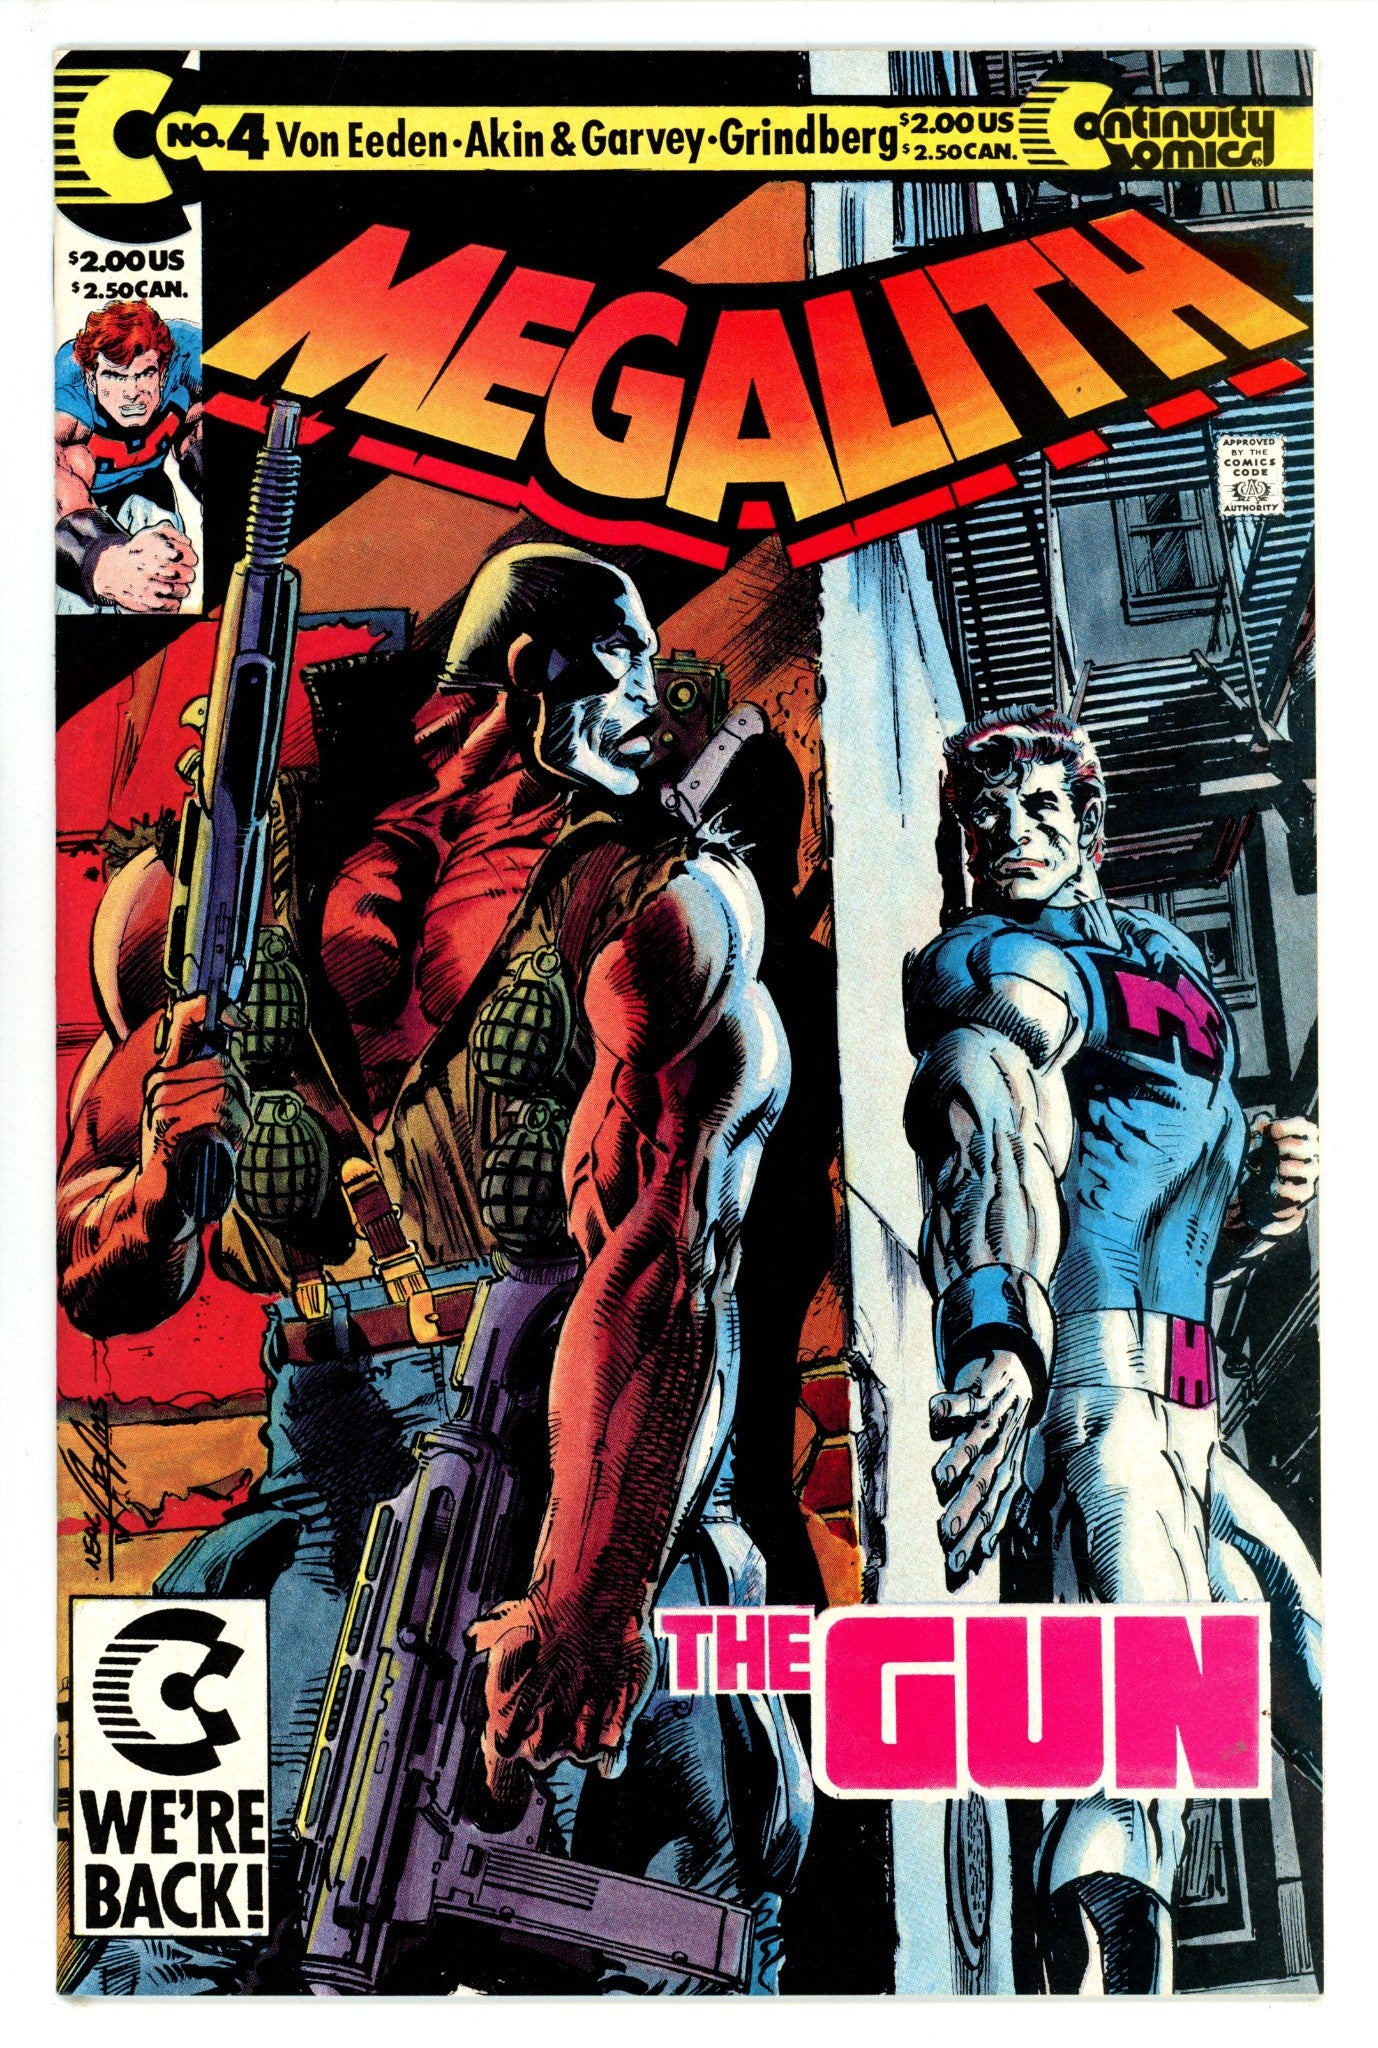 Megalith Vol 1 4 (1990)